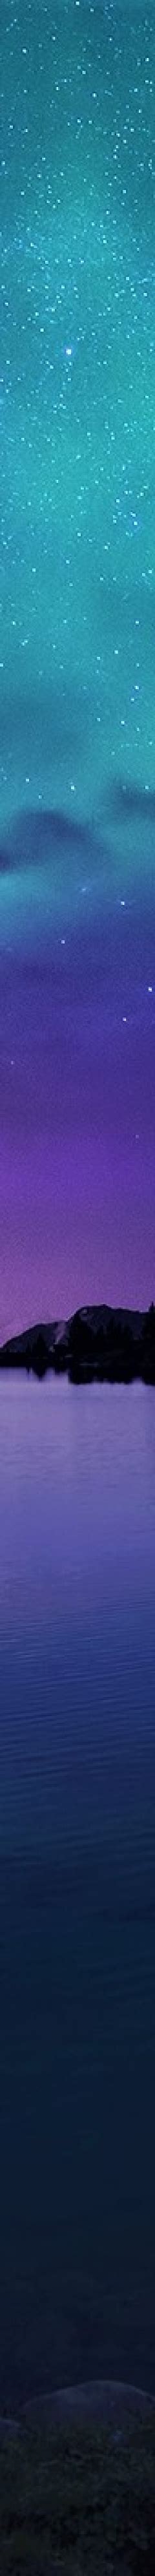 240x4000 Aurora Borealis Northern Lights Over Mountain Lake 240x4000